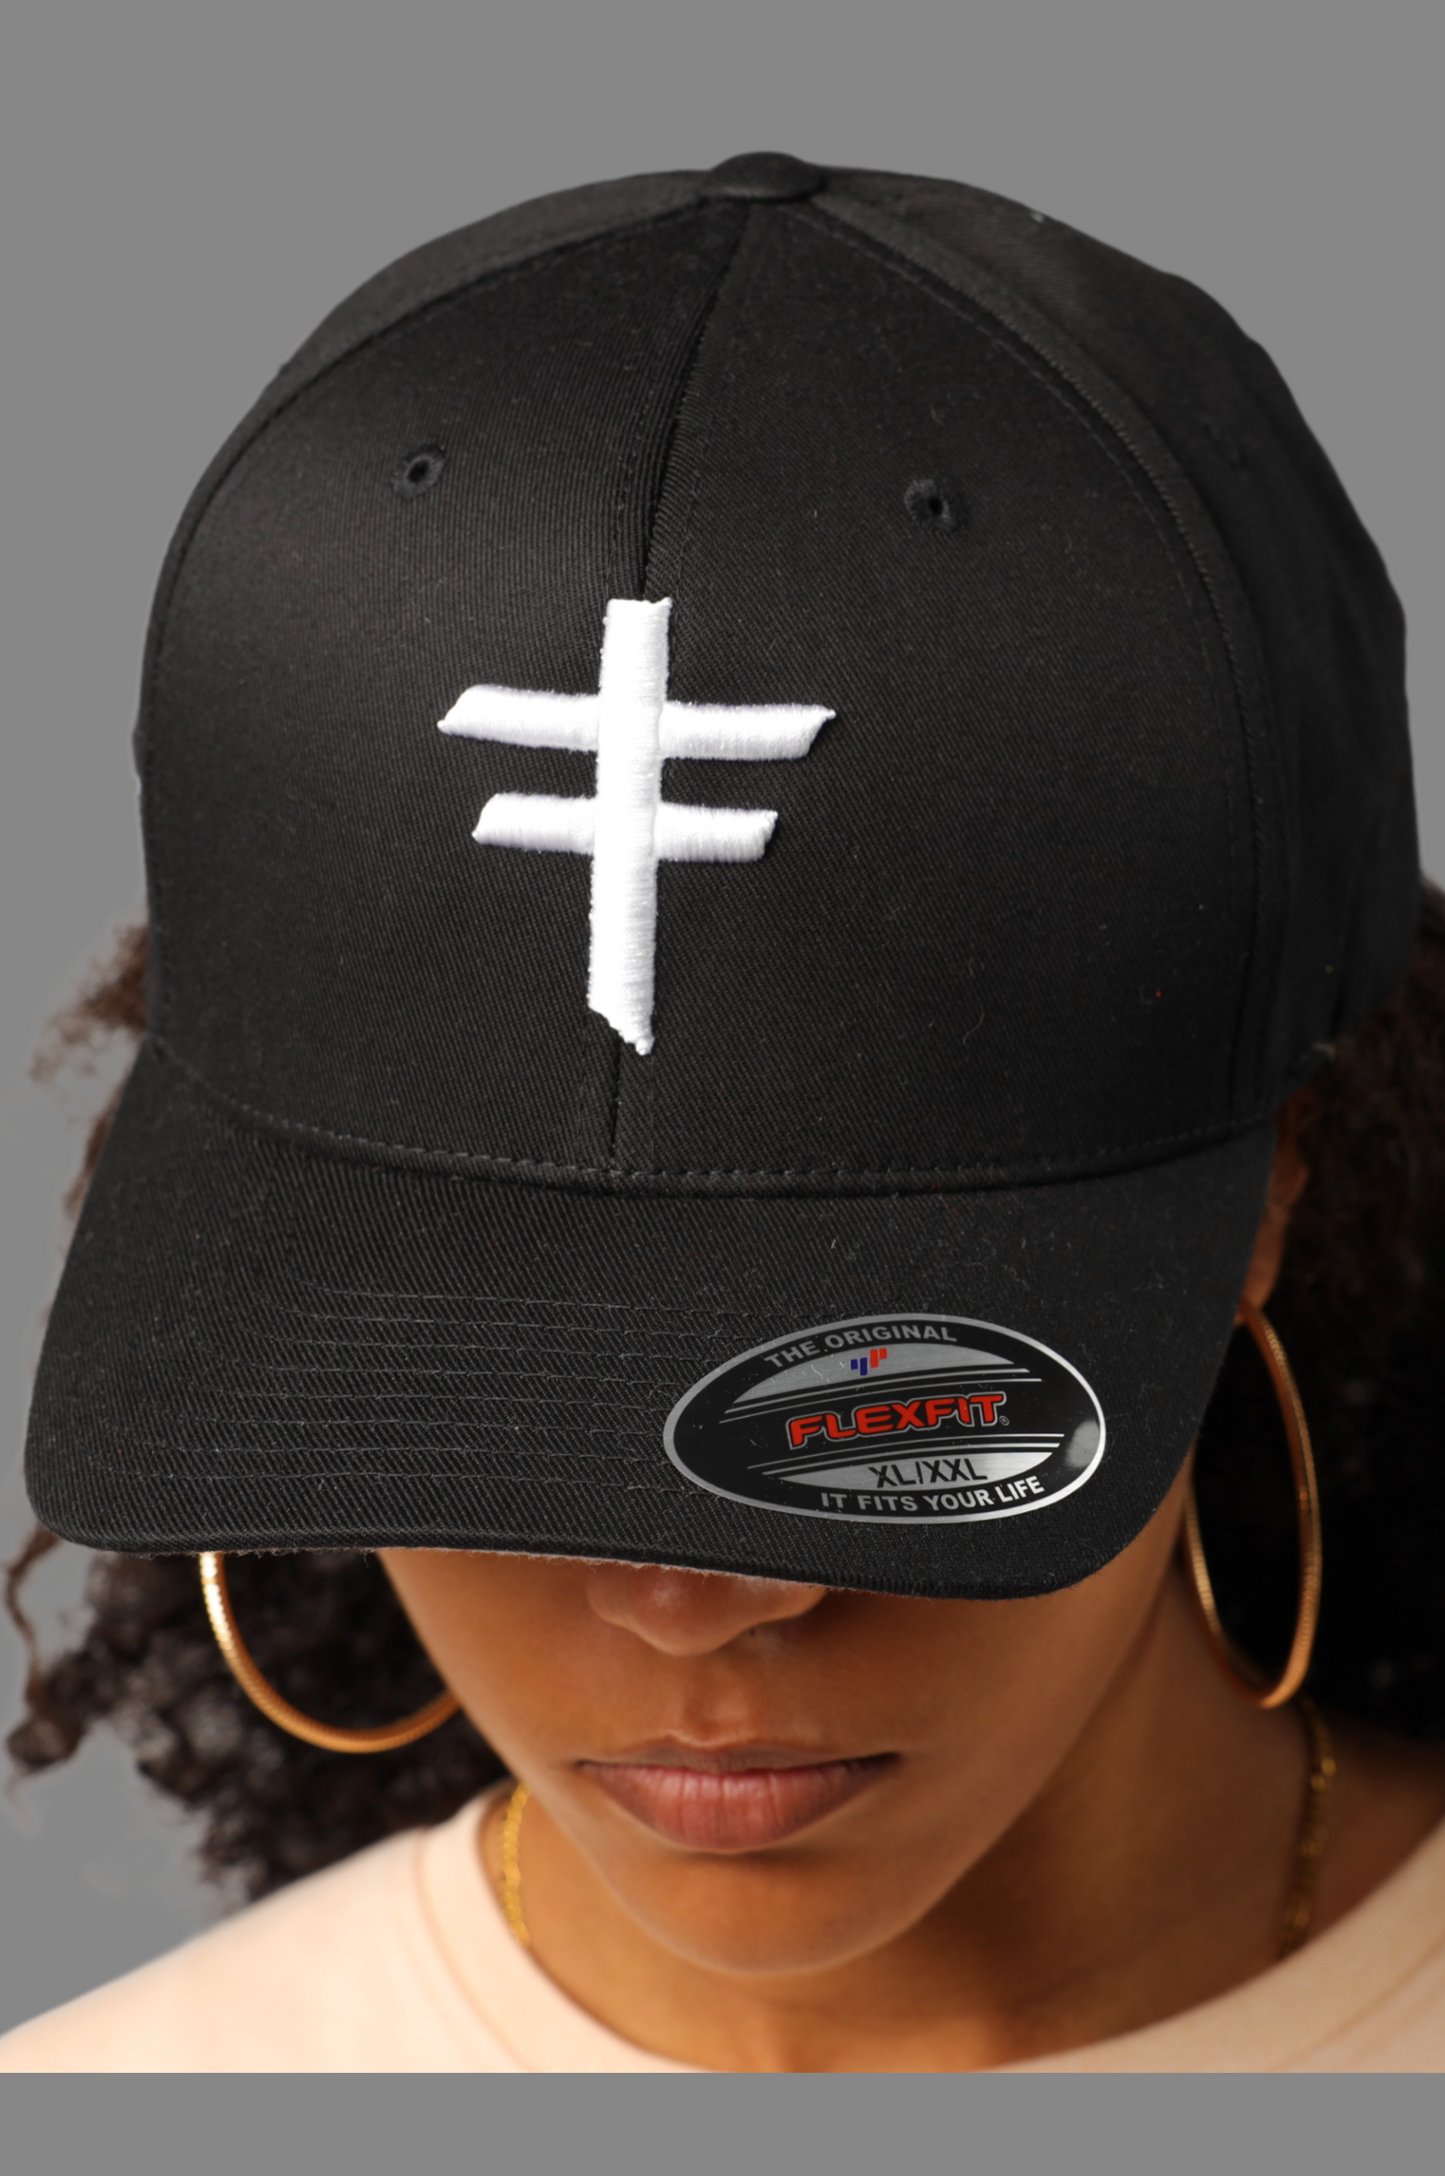 XL - XXL FITTED CAP ( Black & White)